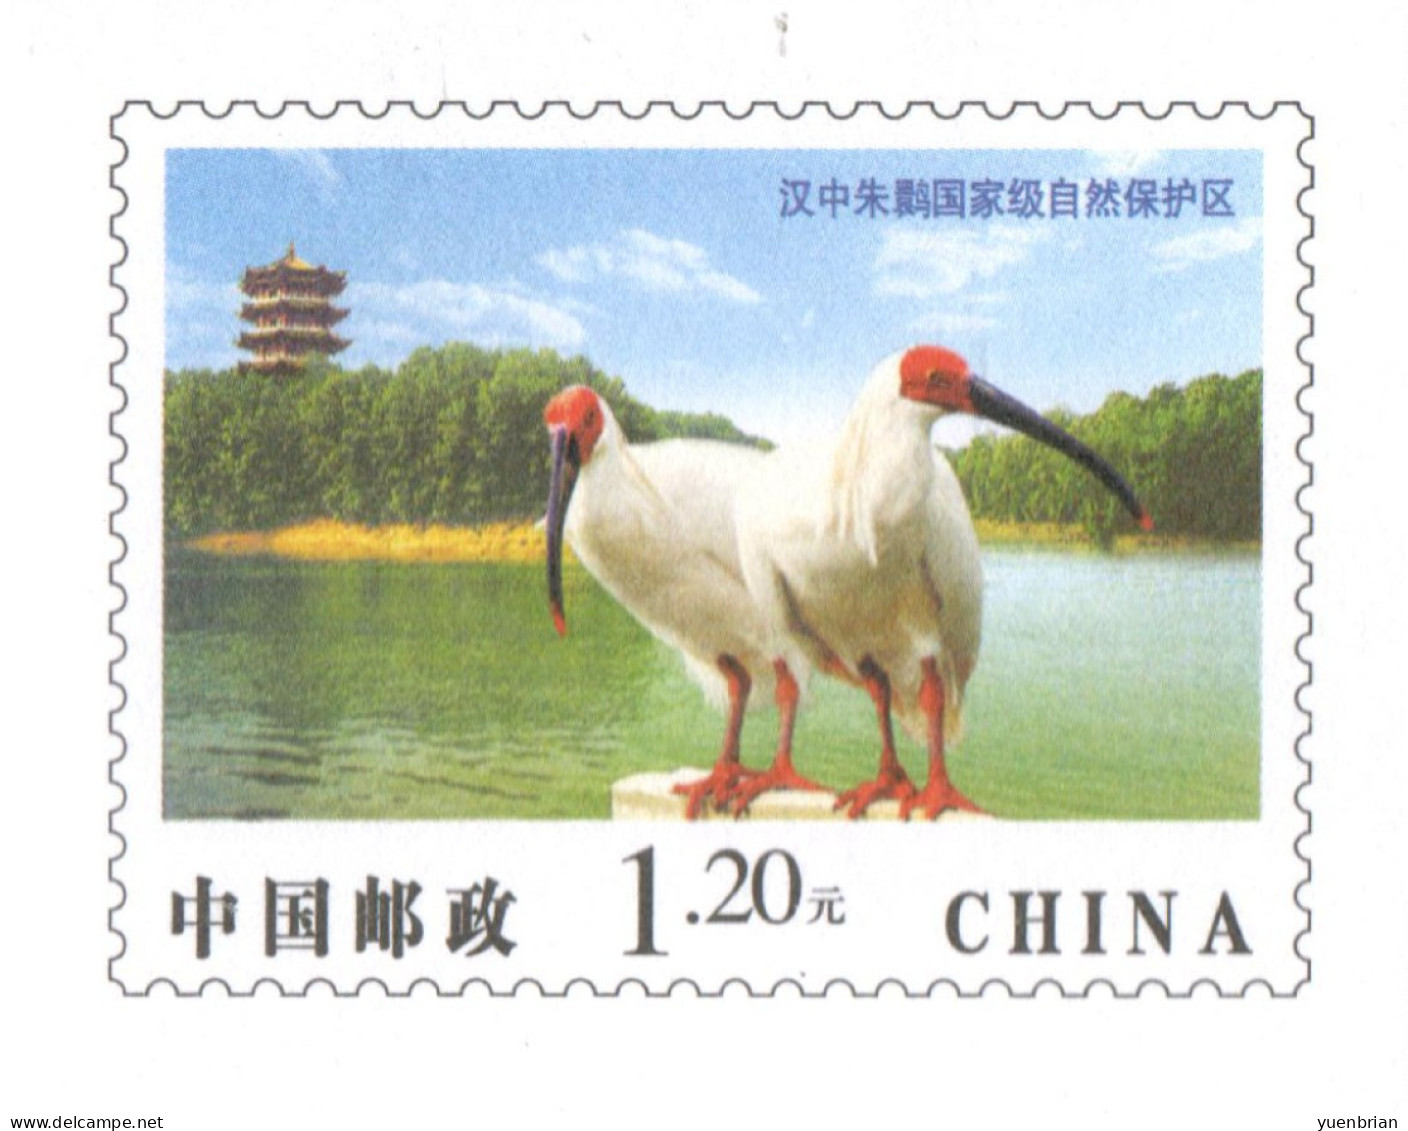 China 2009, Postal Stationary, Pre-Stamped Cover $1.20, Crane, MNH** - Grues Et Gruiformes